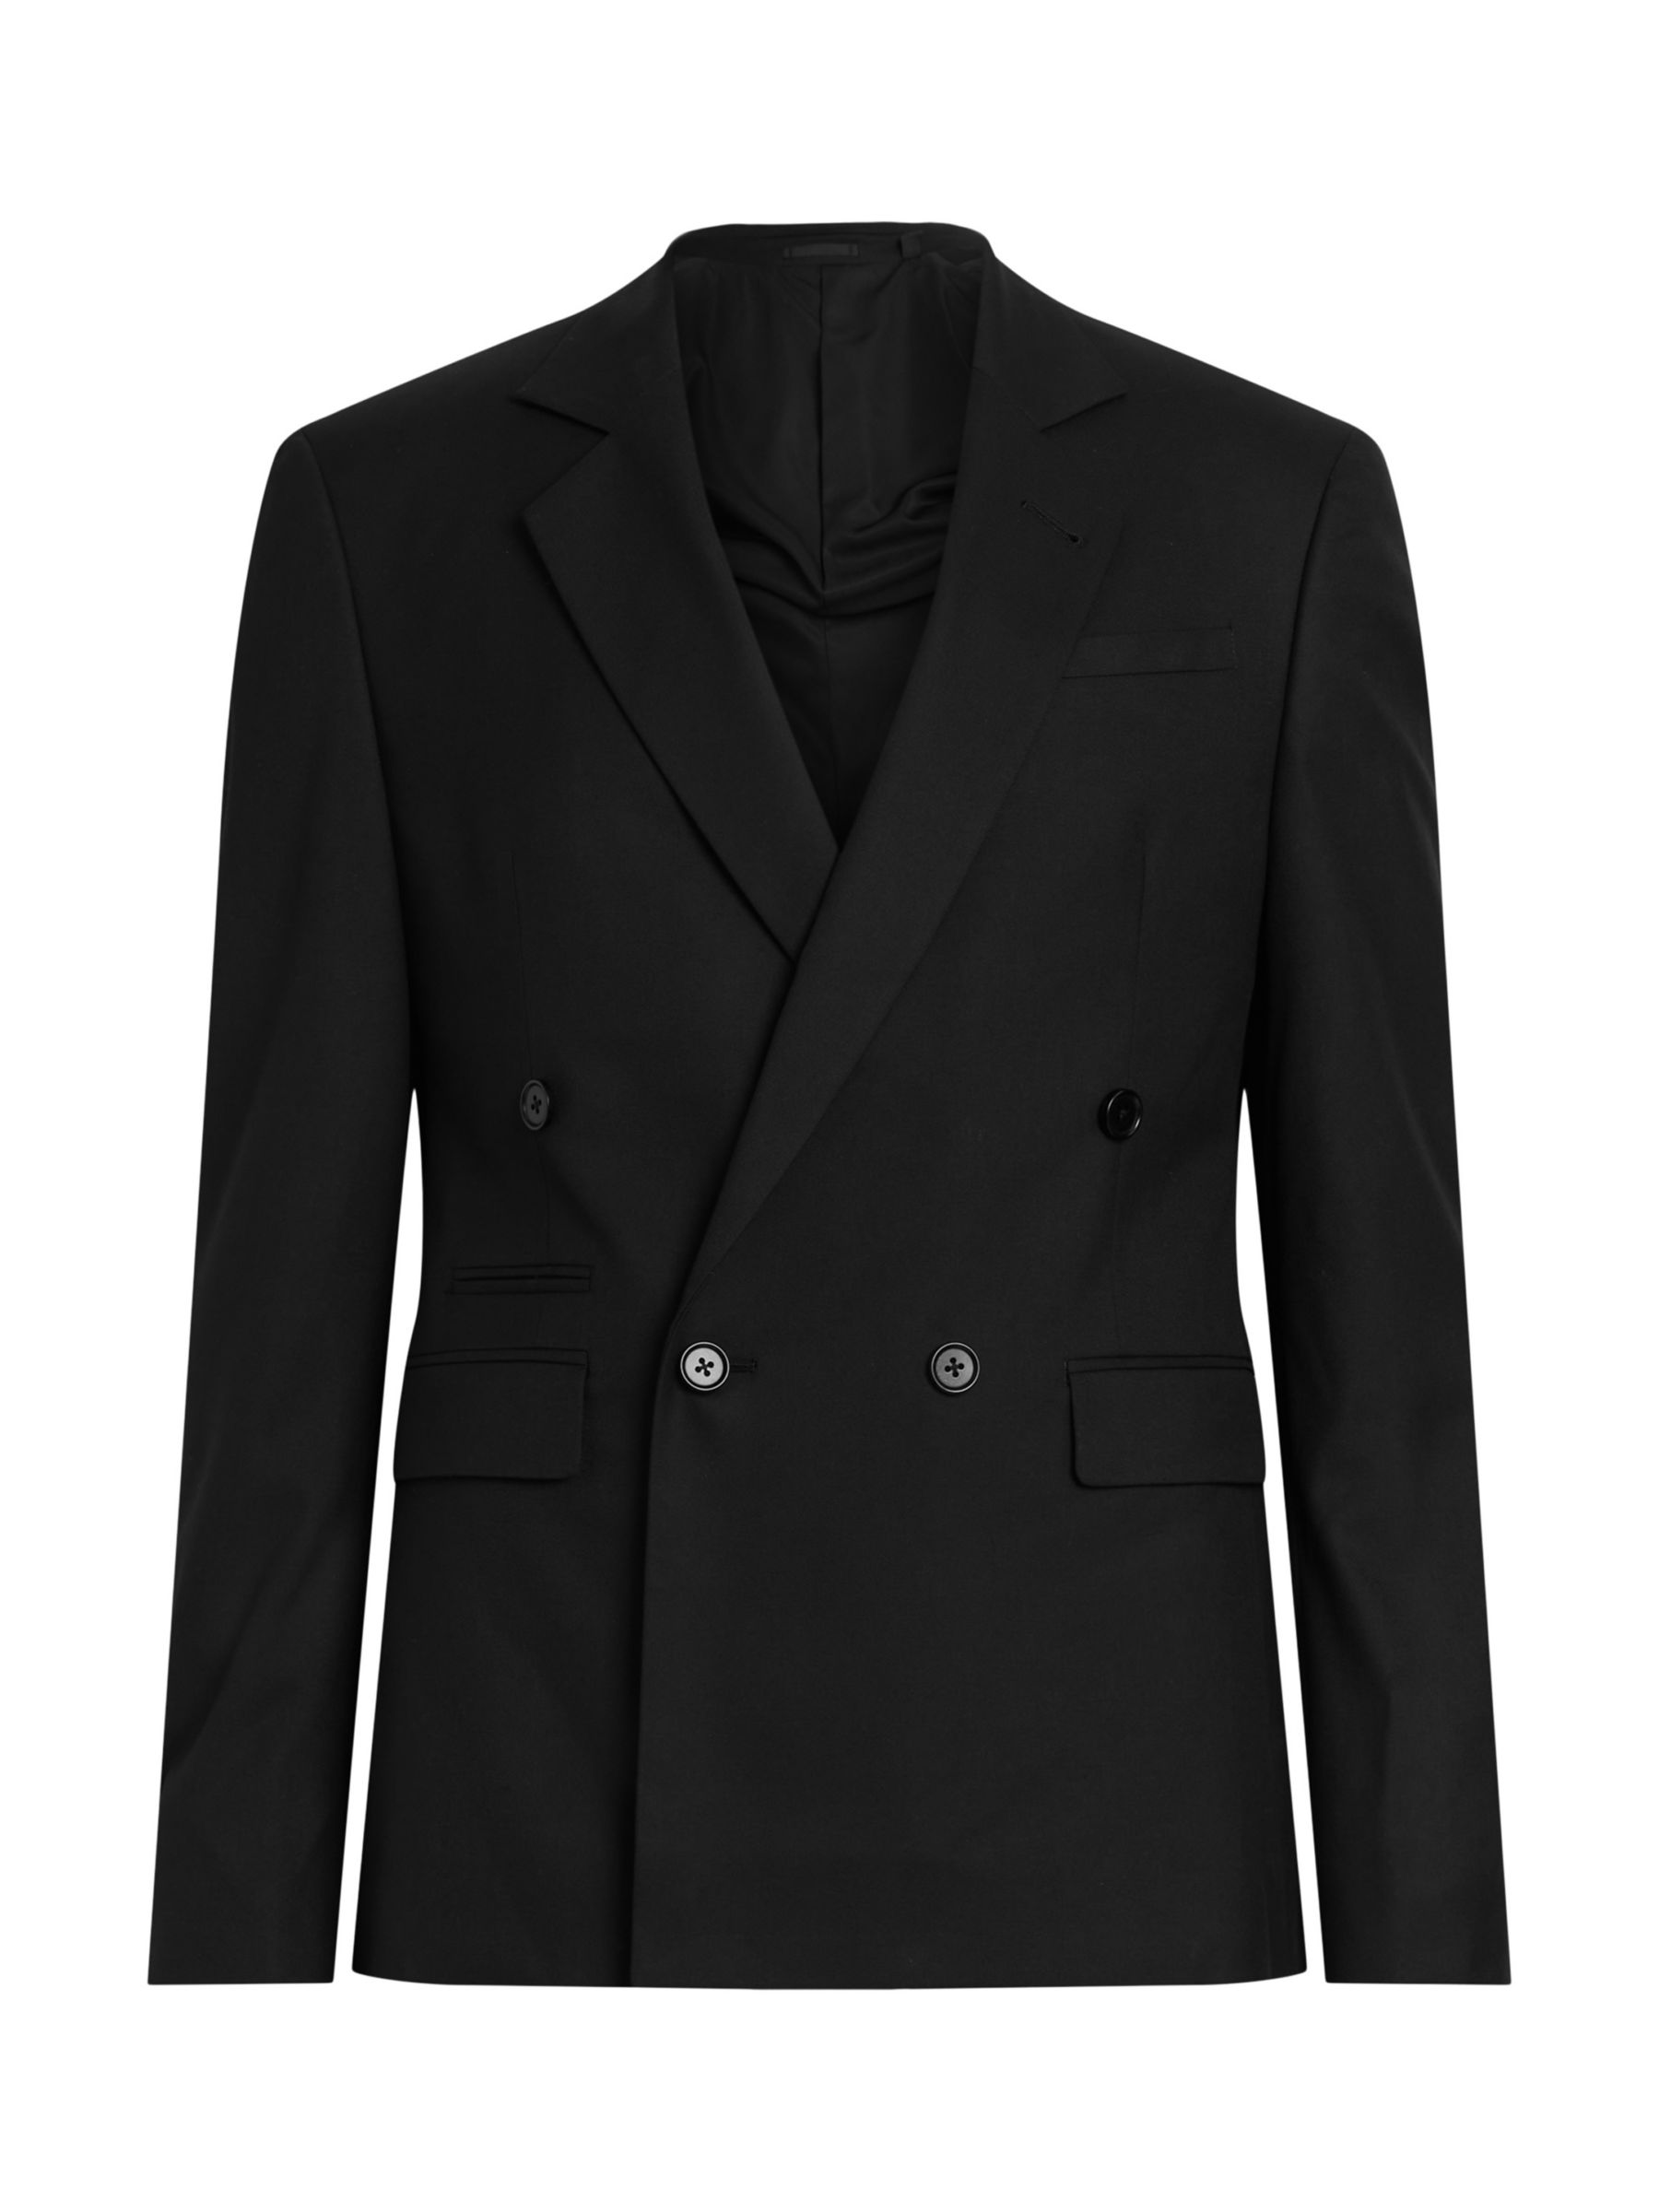 AllSaints Evar Tailored Fit Blazer, Black, 34